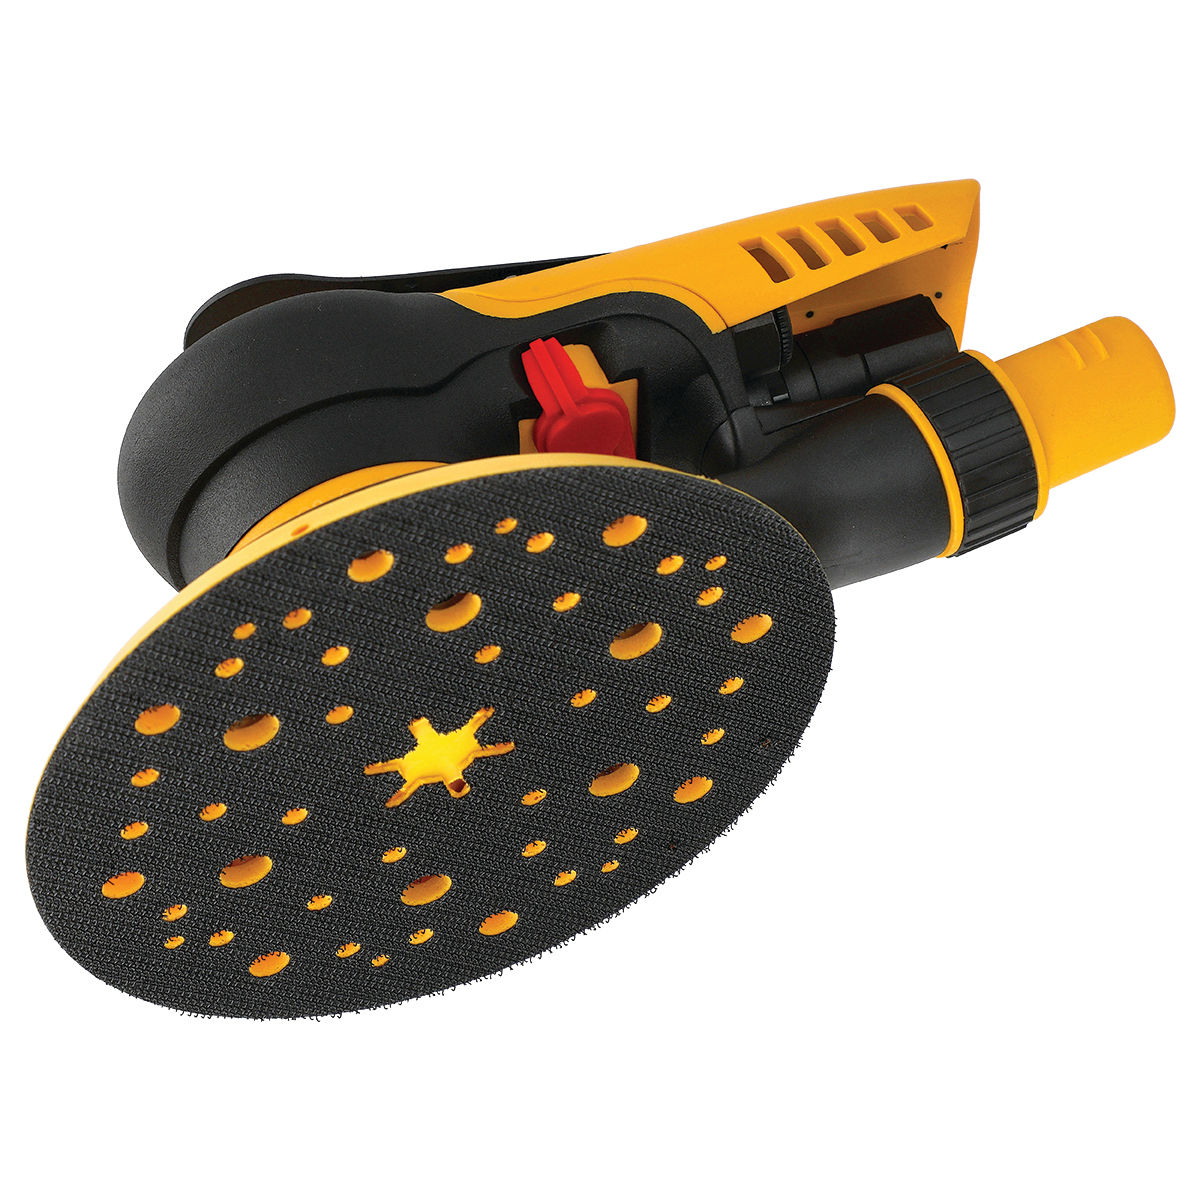 Vacuum Adapter for Black and Decker Sanders - Galactic Gadgets